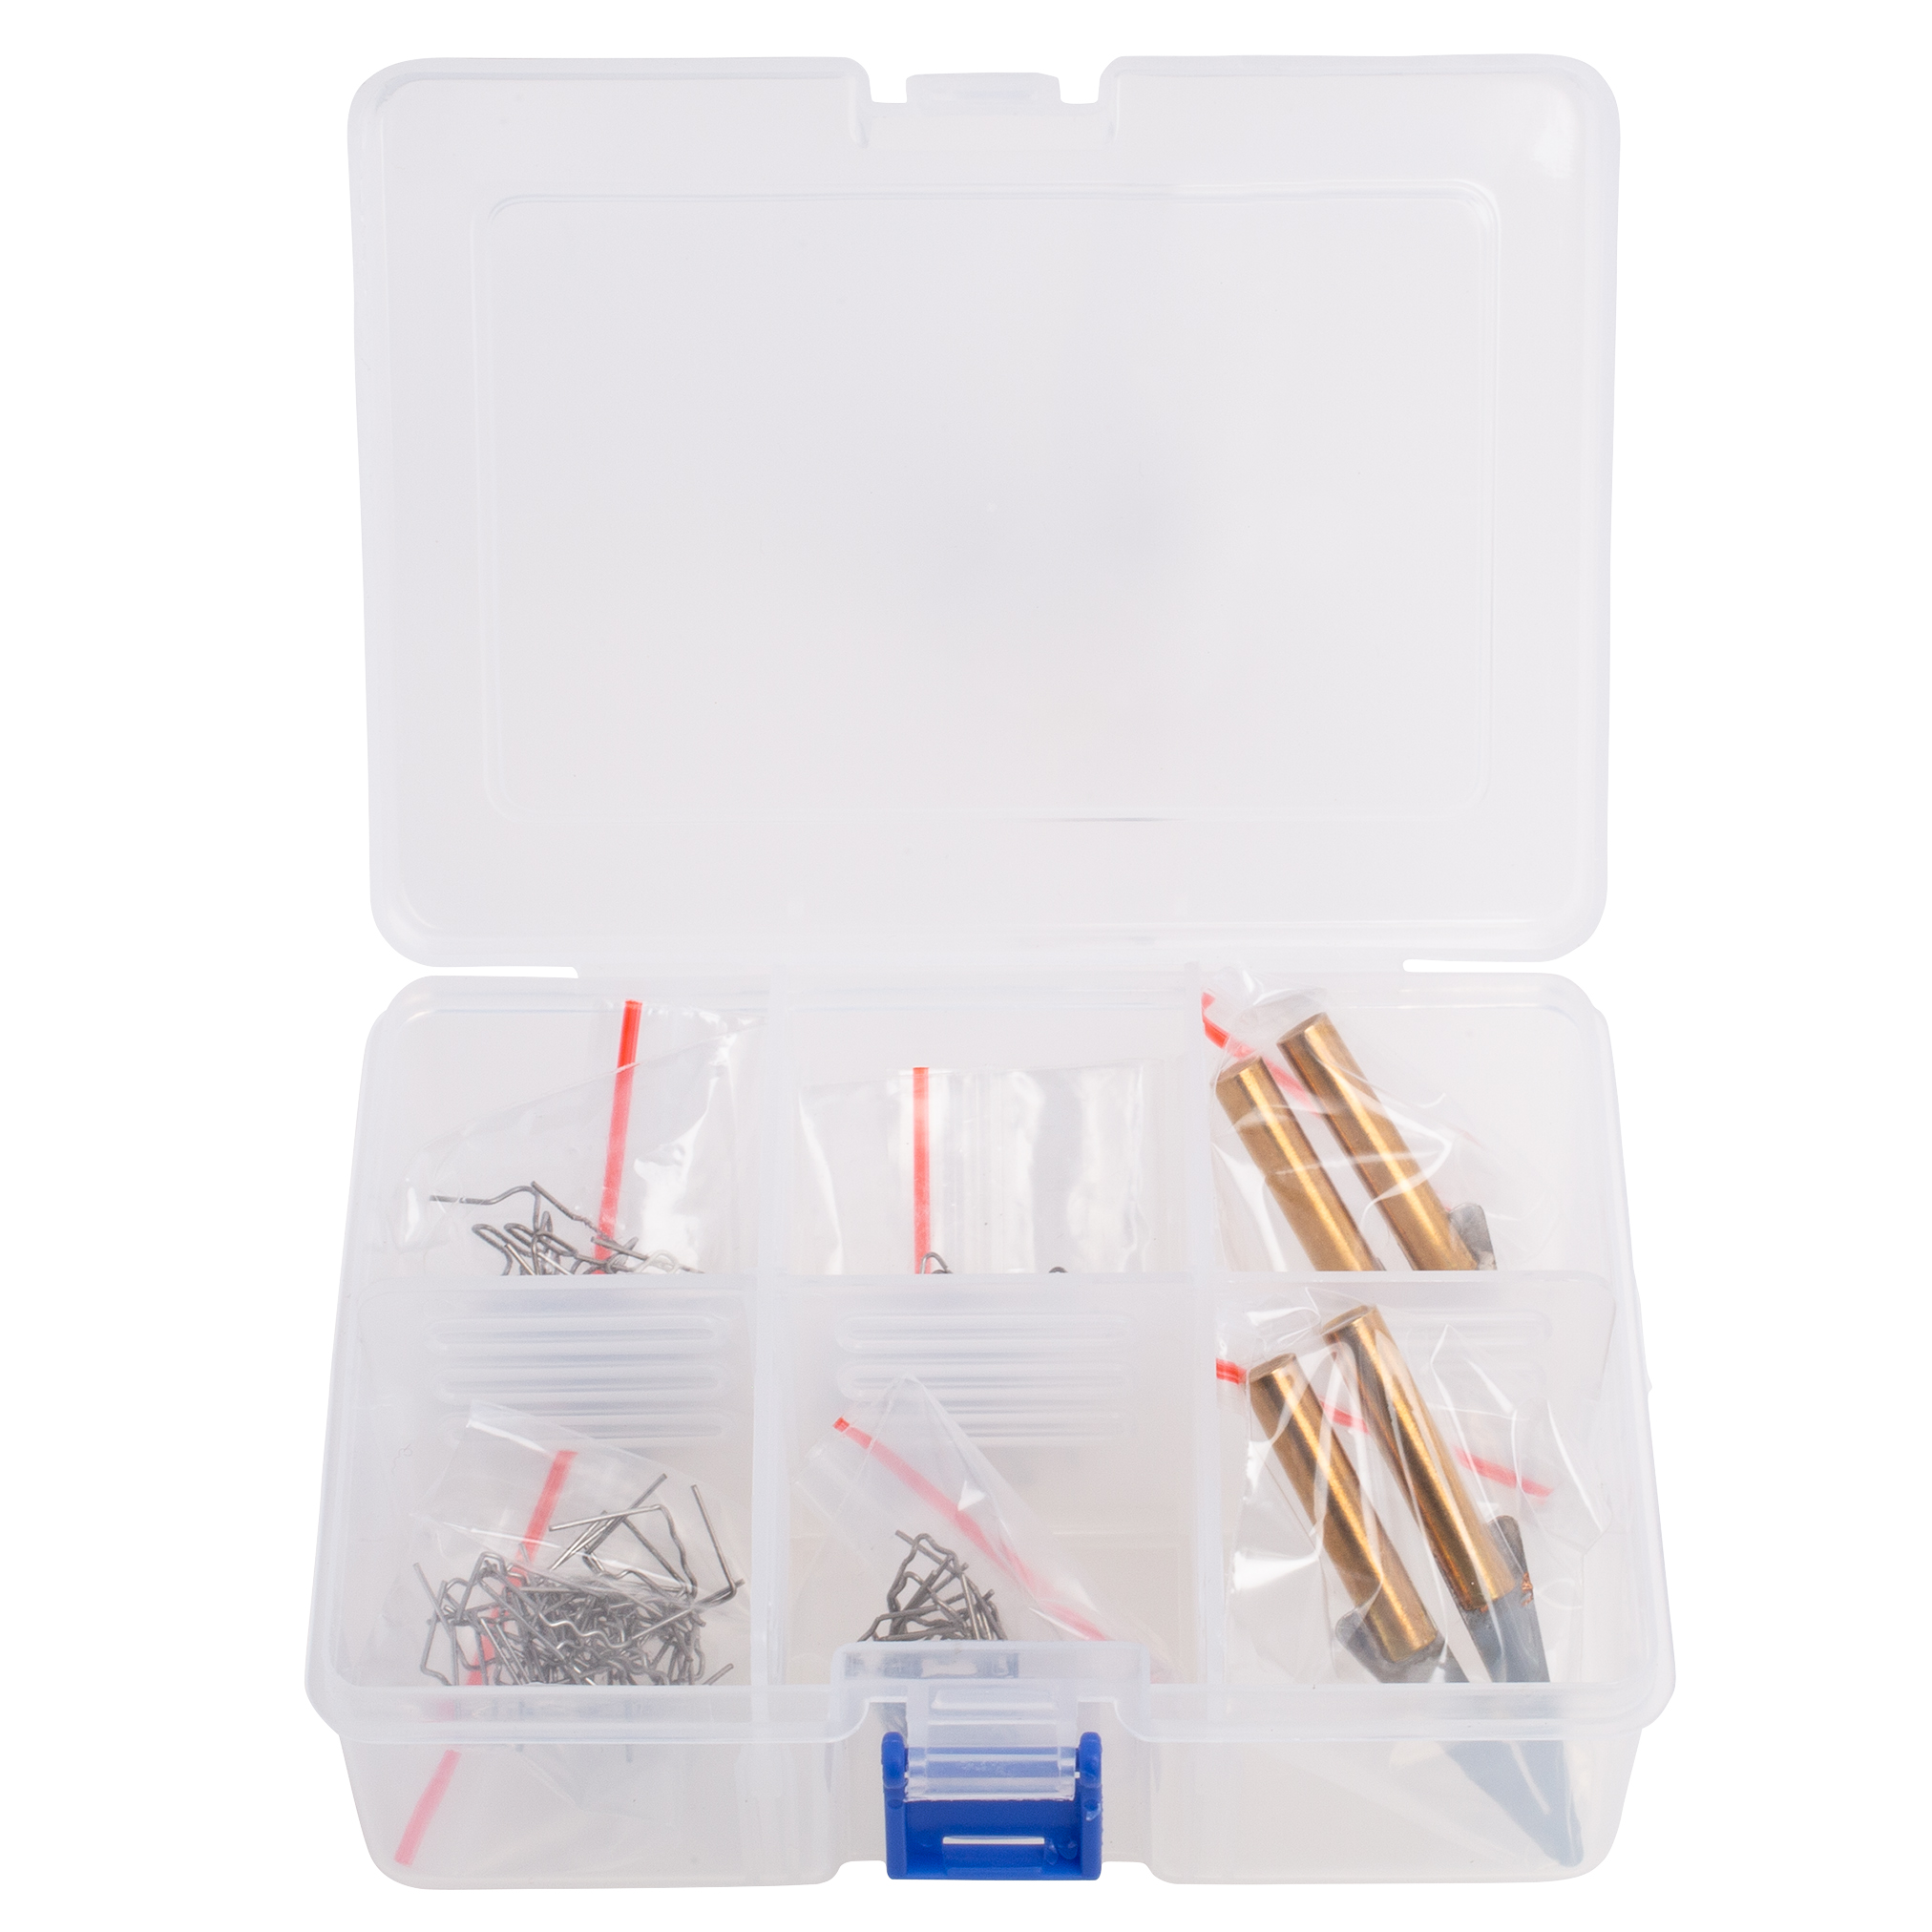 OVERSTOCK SALE! Pro-Tack Plastic Welder Complete Kit - Includes